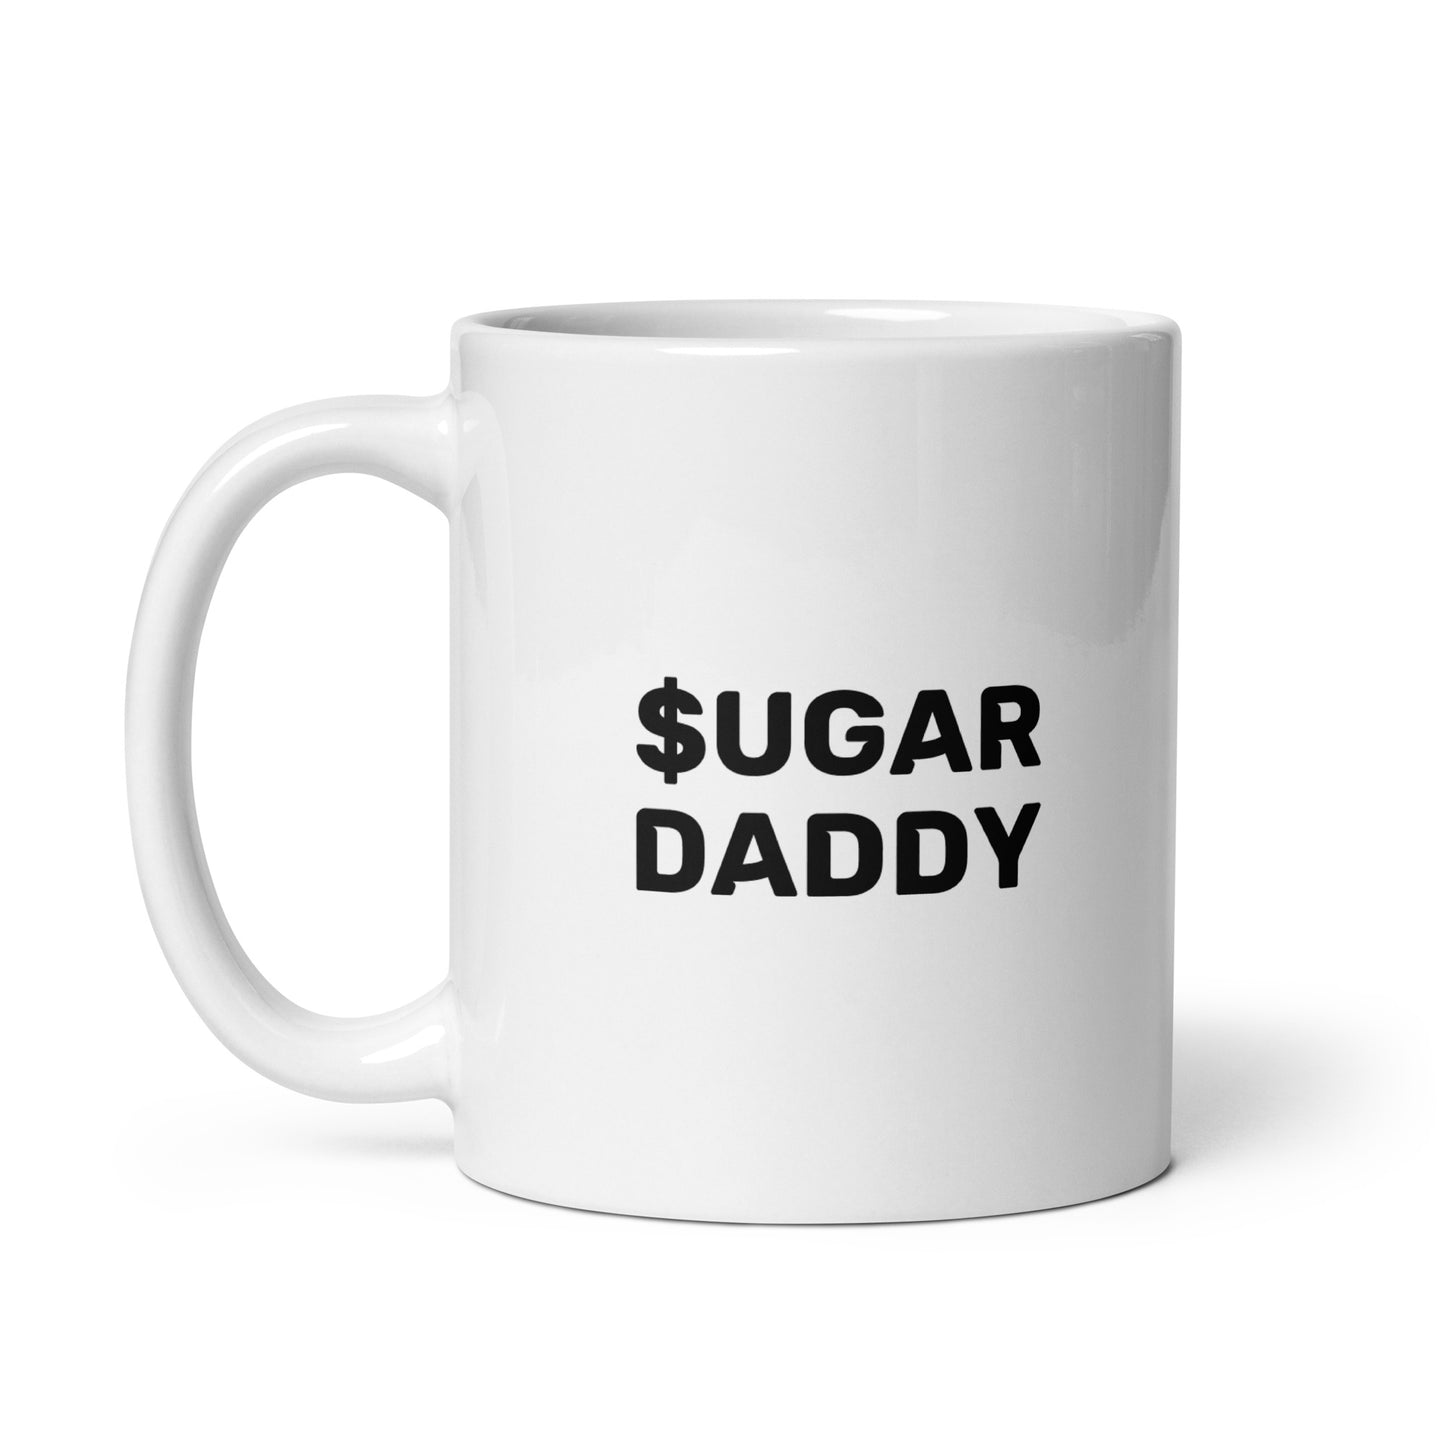 Mug Sugar daddy - Sedurro